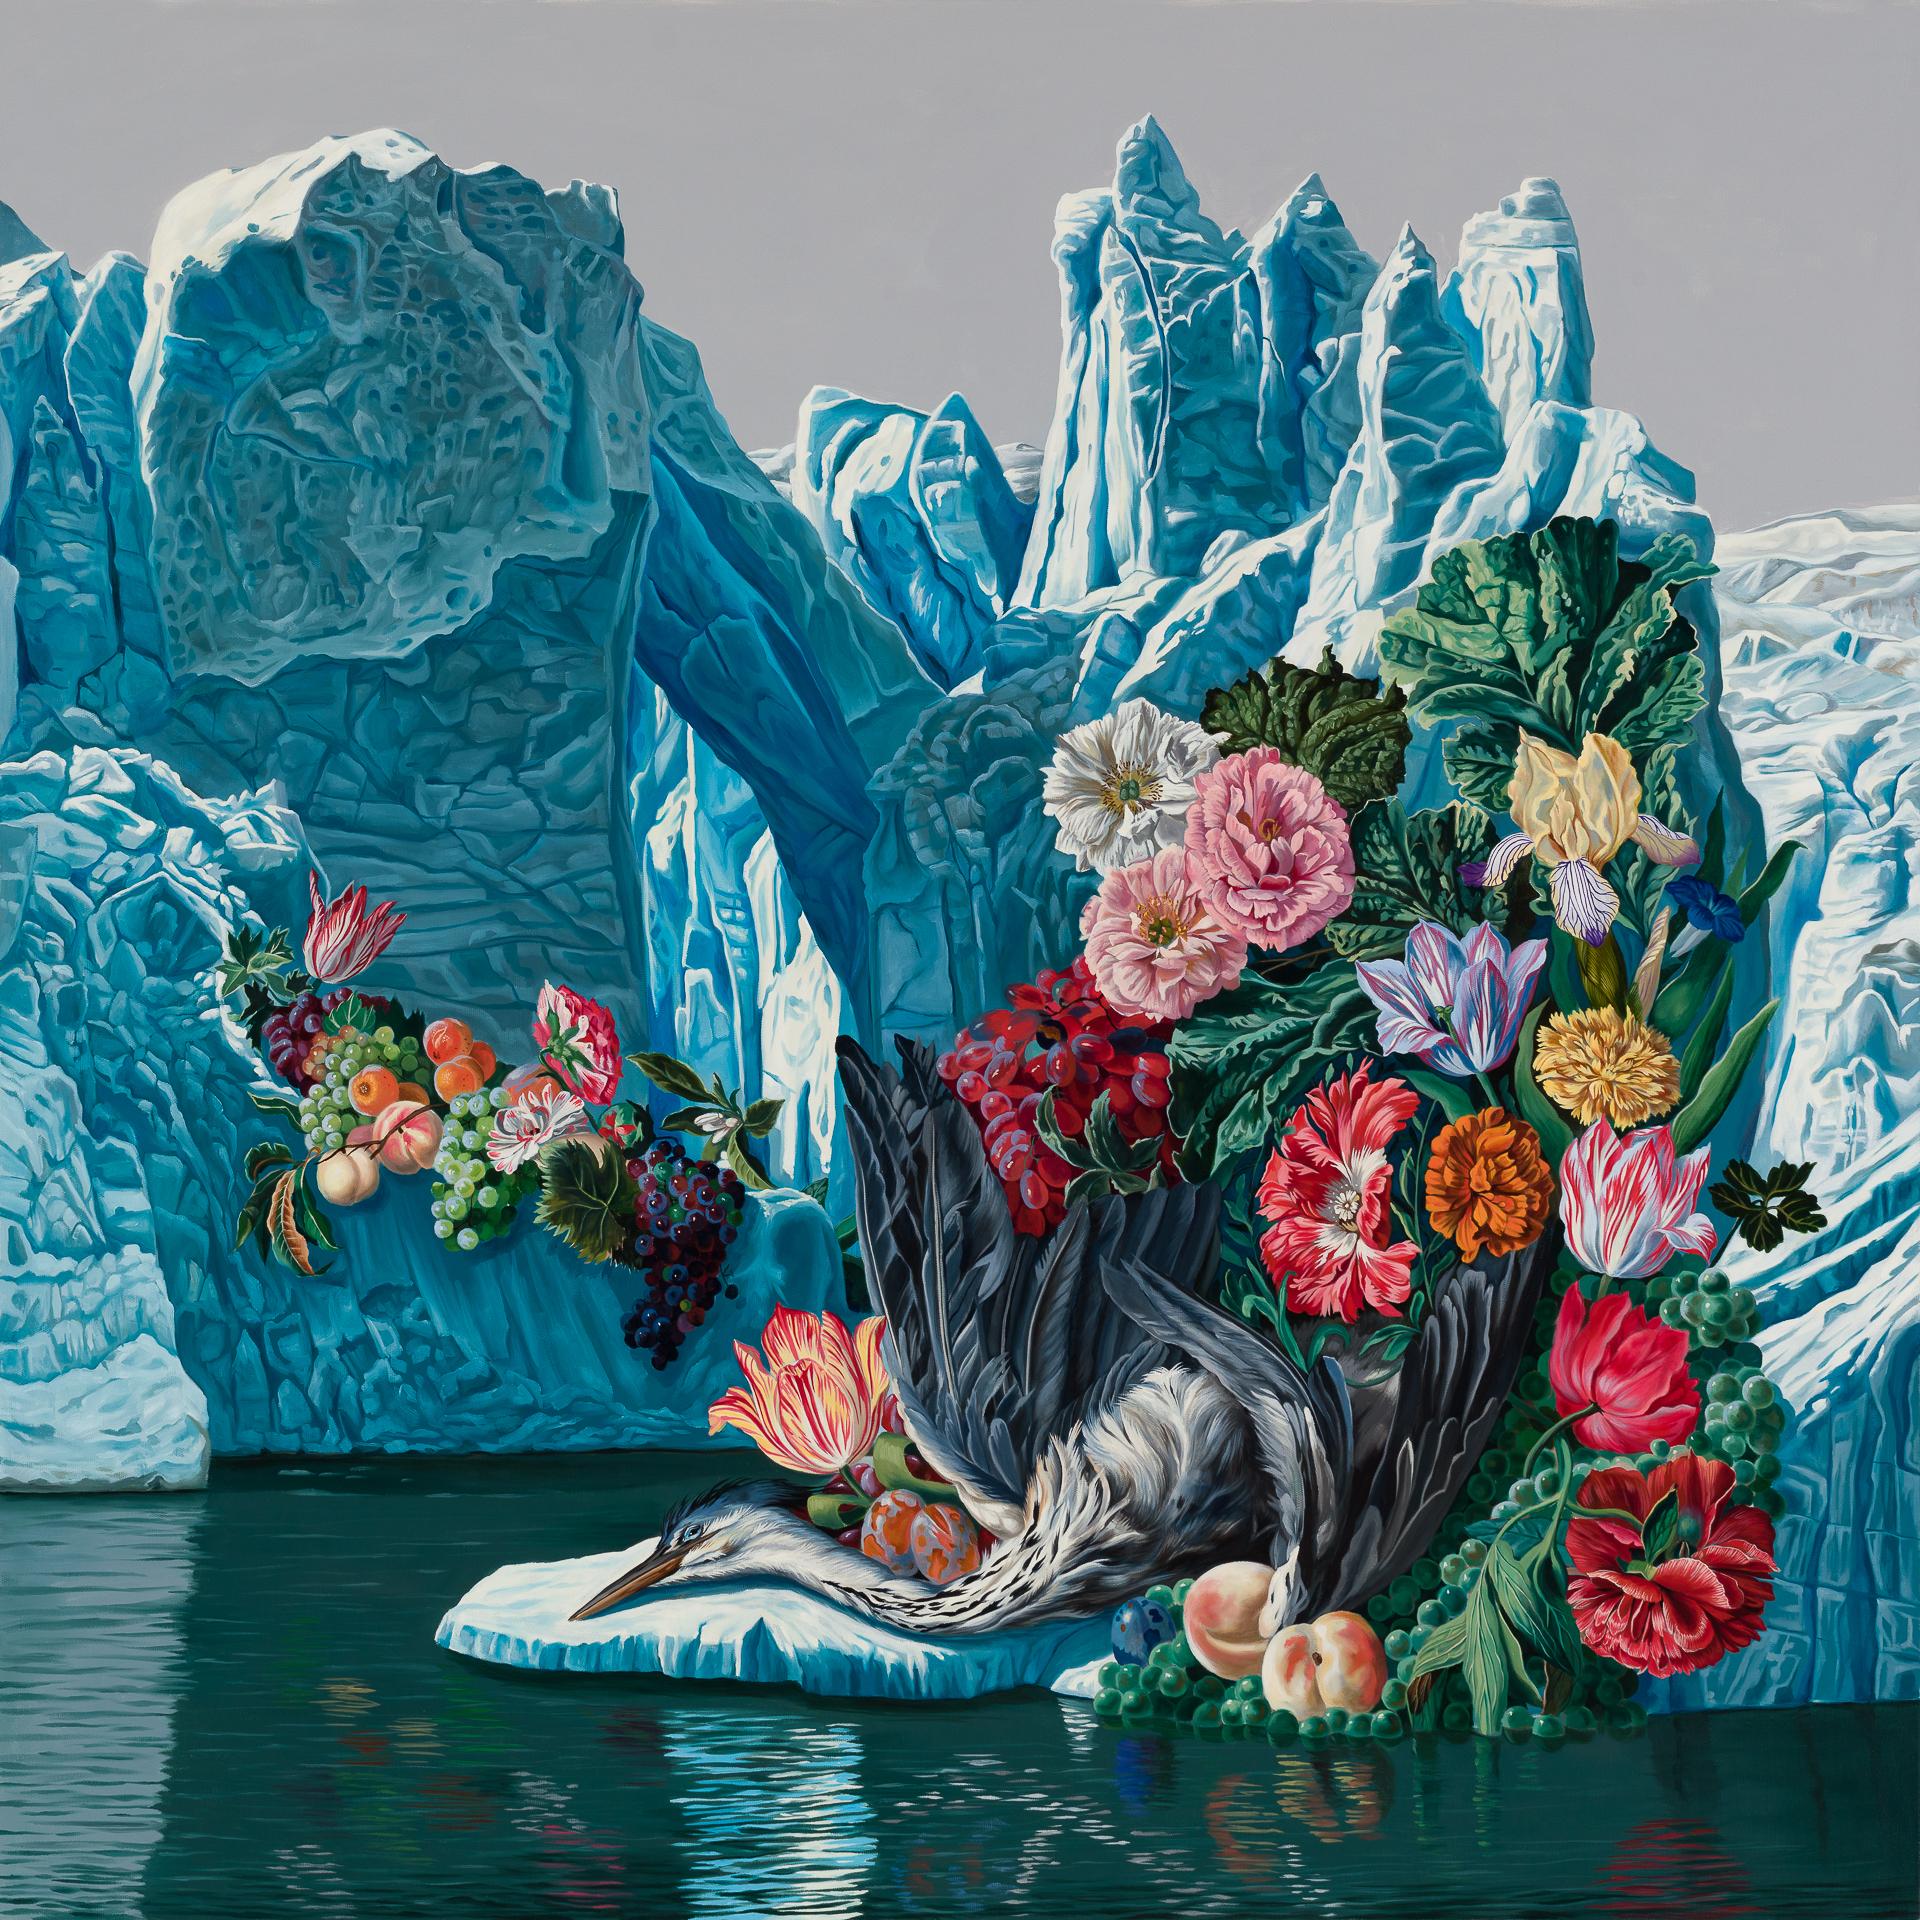 Robin Hextrum Landscape Painting - "Resting Place" Oil Painting